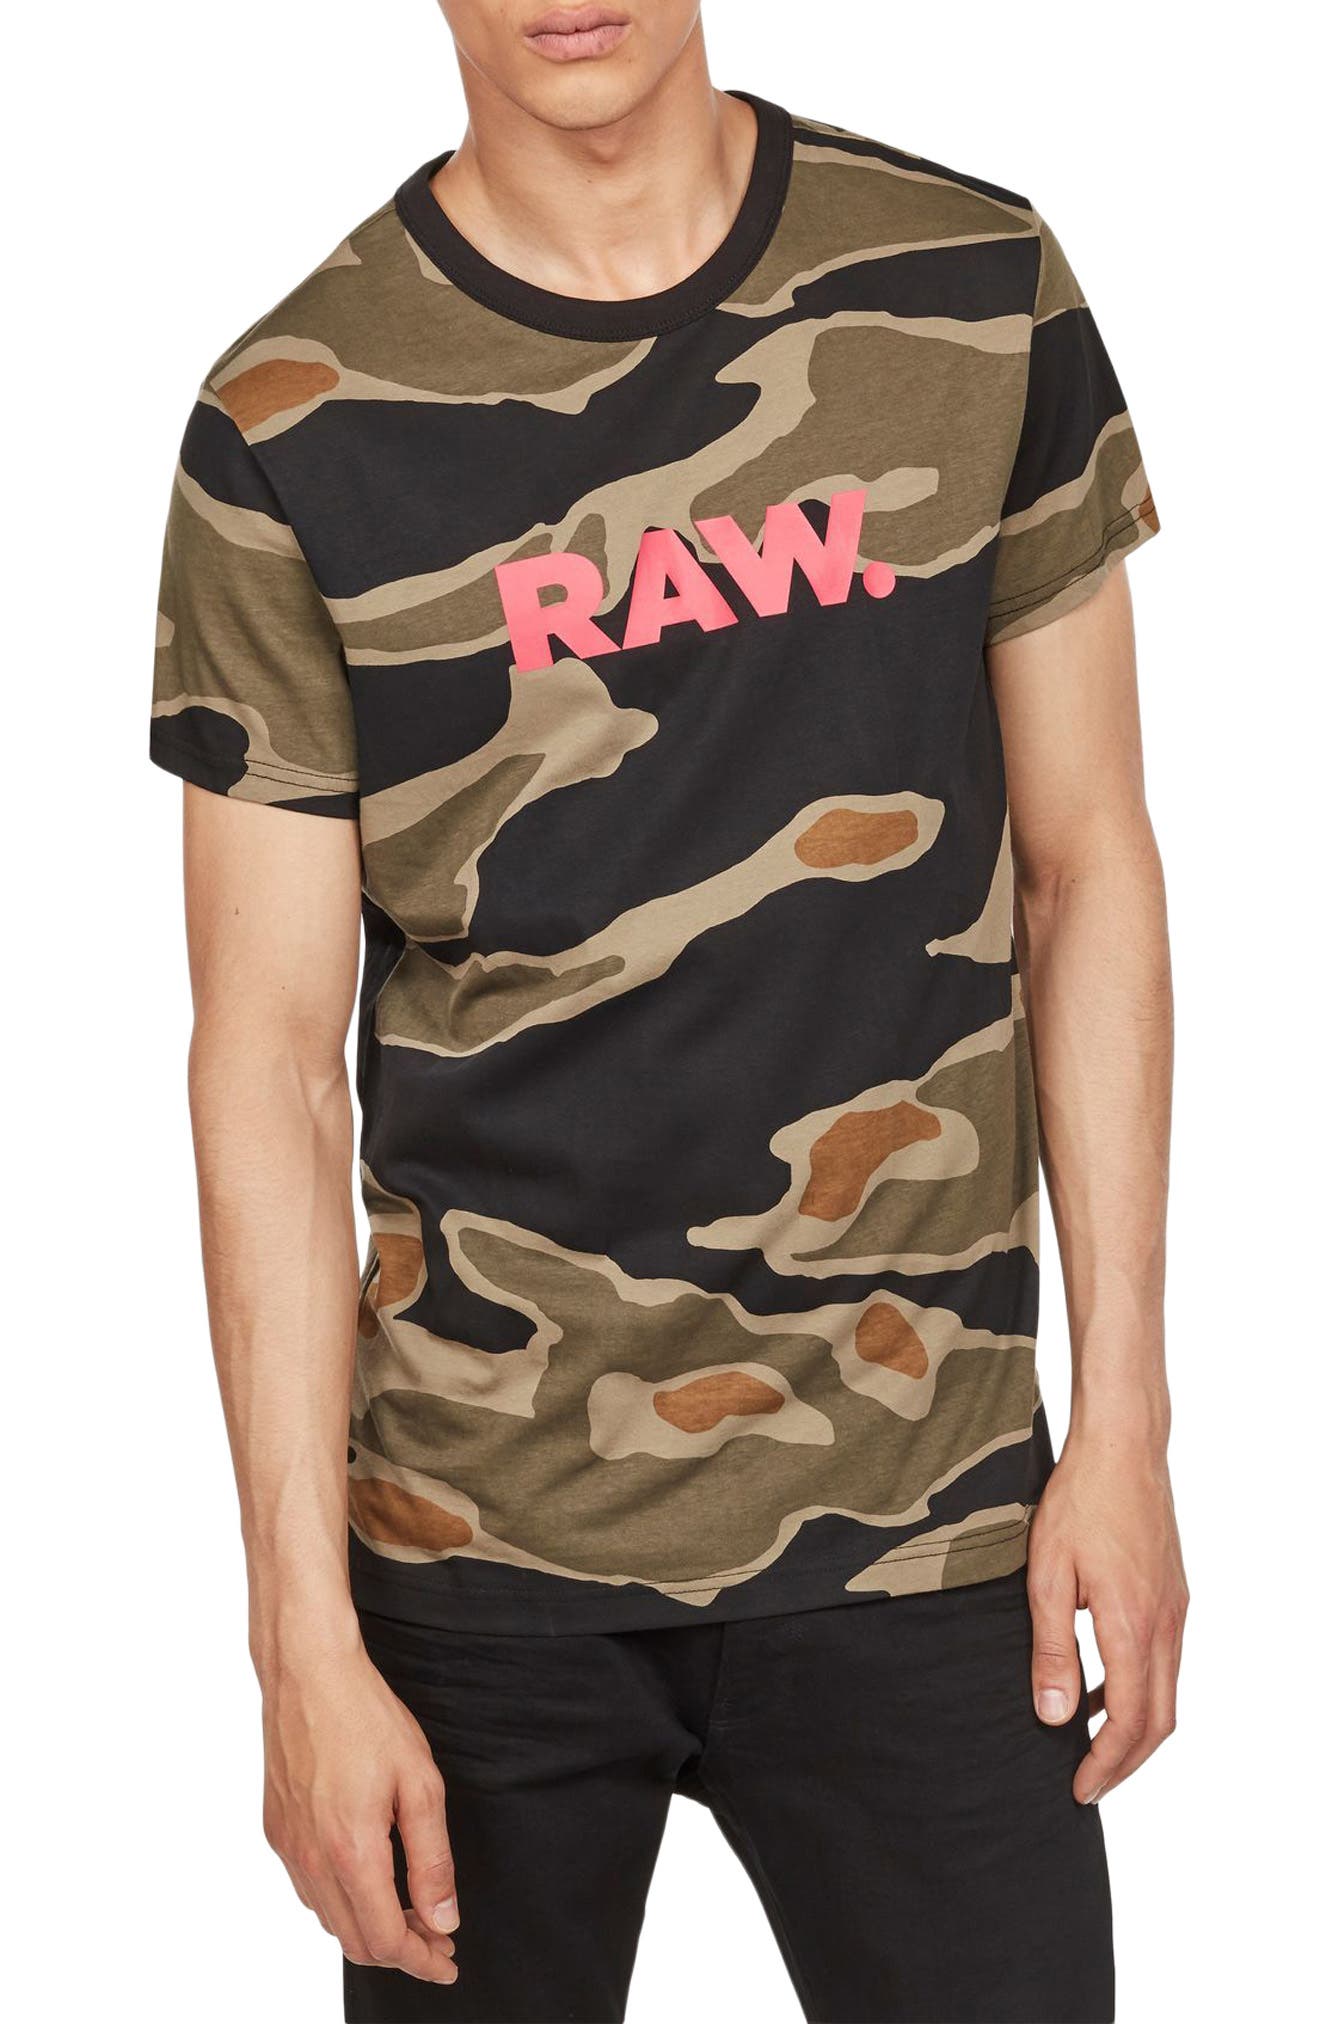 raw camo shirt